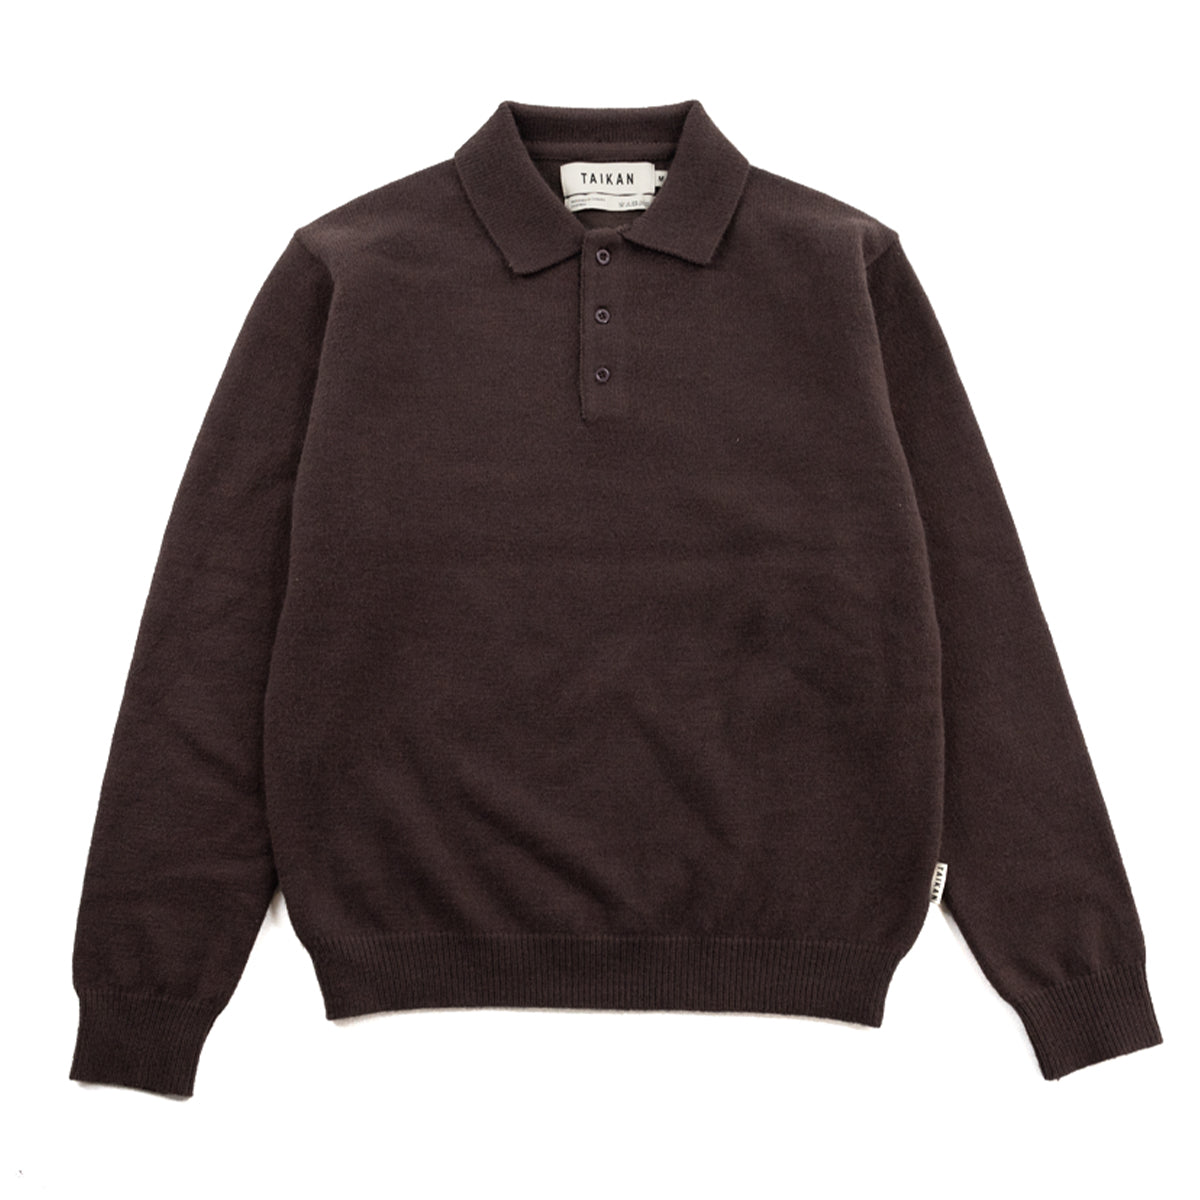 Taikan Men Marle LS Polo Sweater Brown TK0011-BRN - T-SHIRTS - Canada